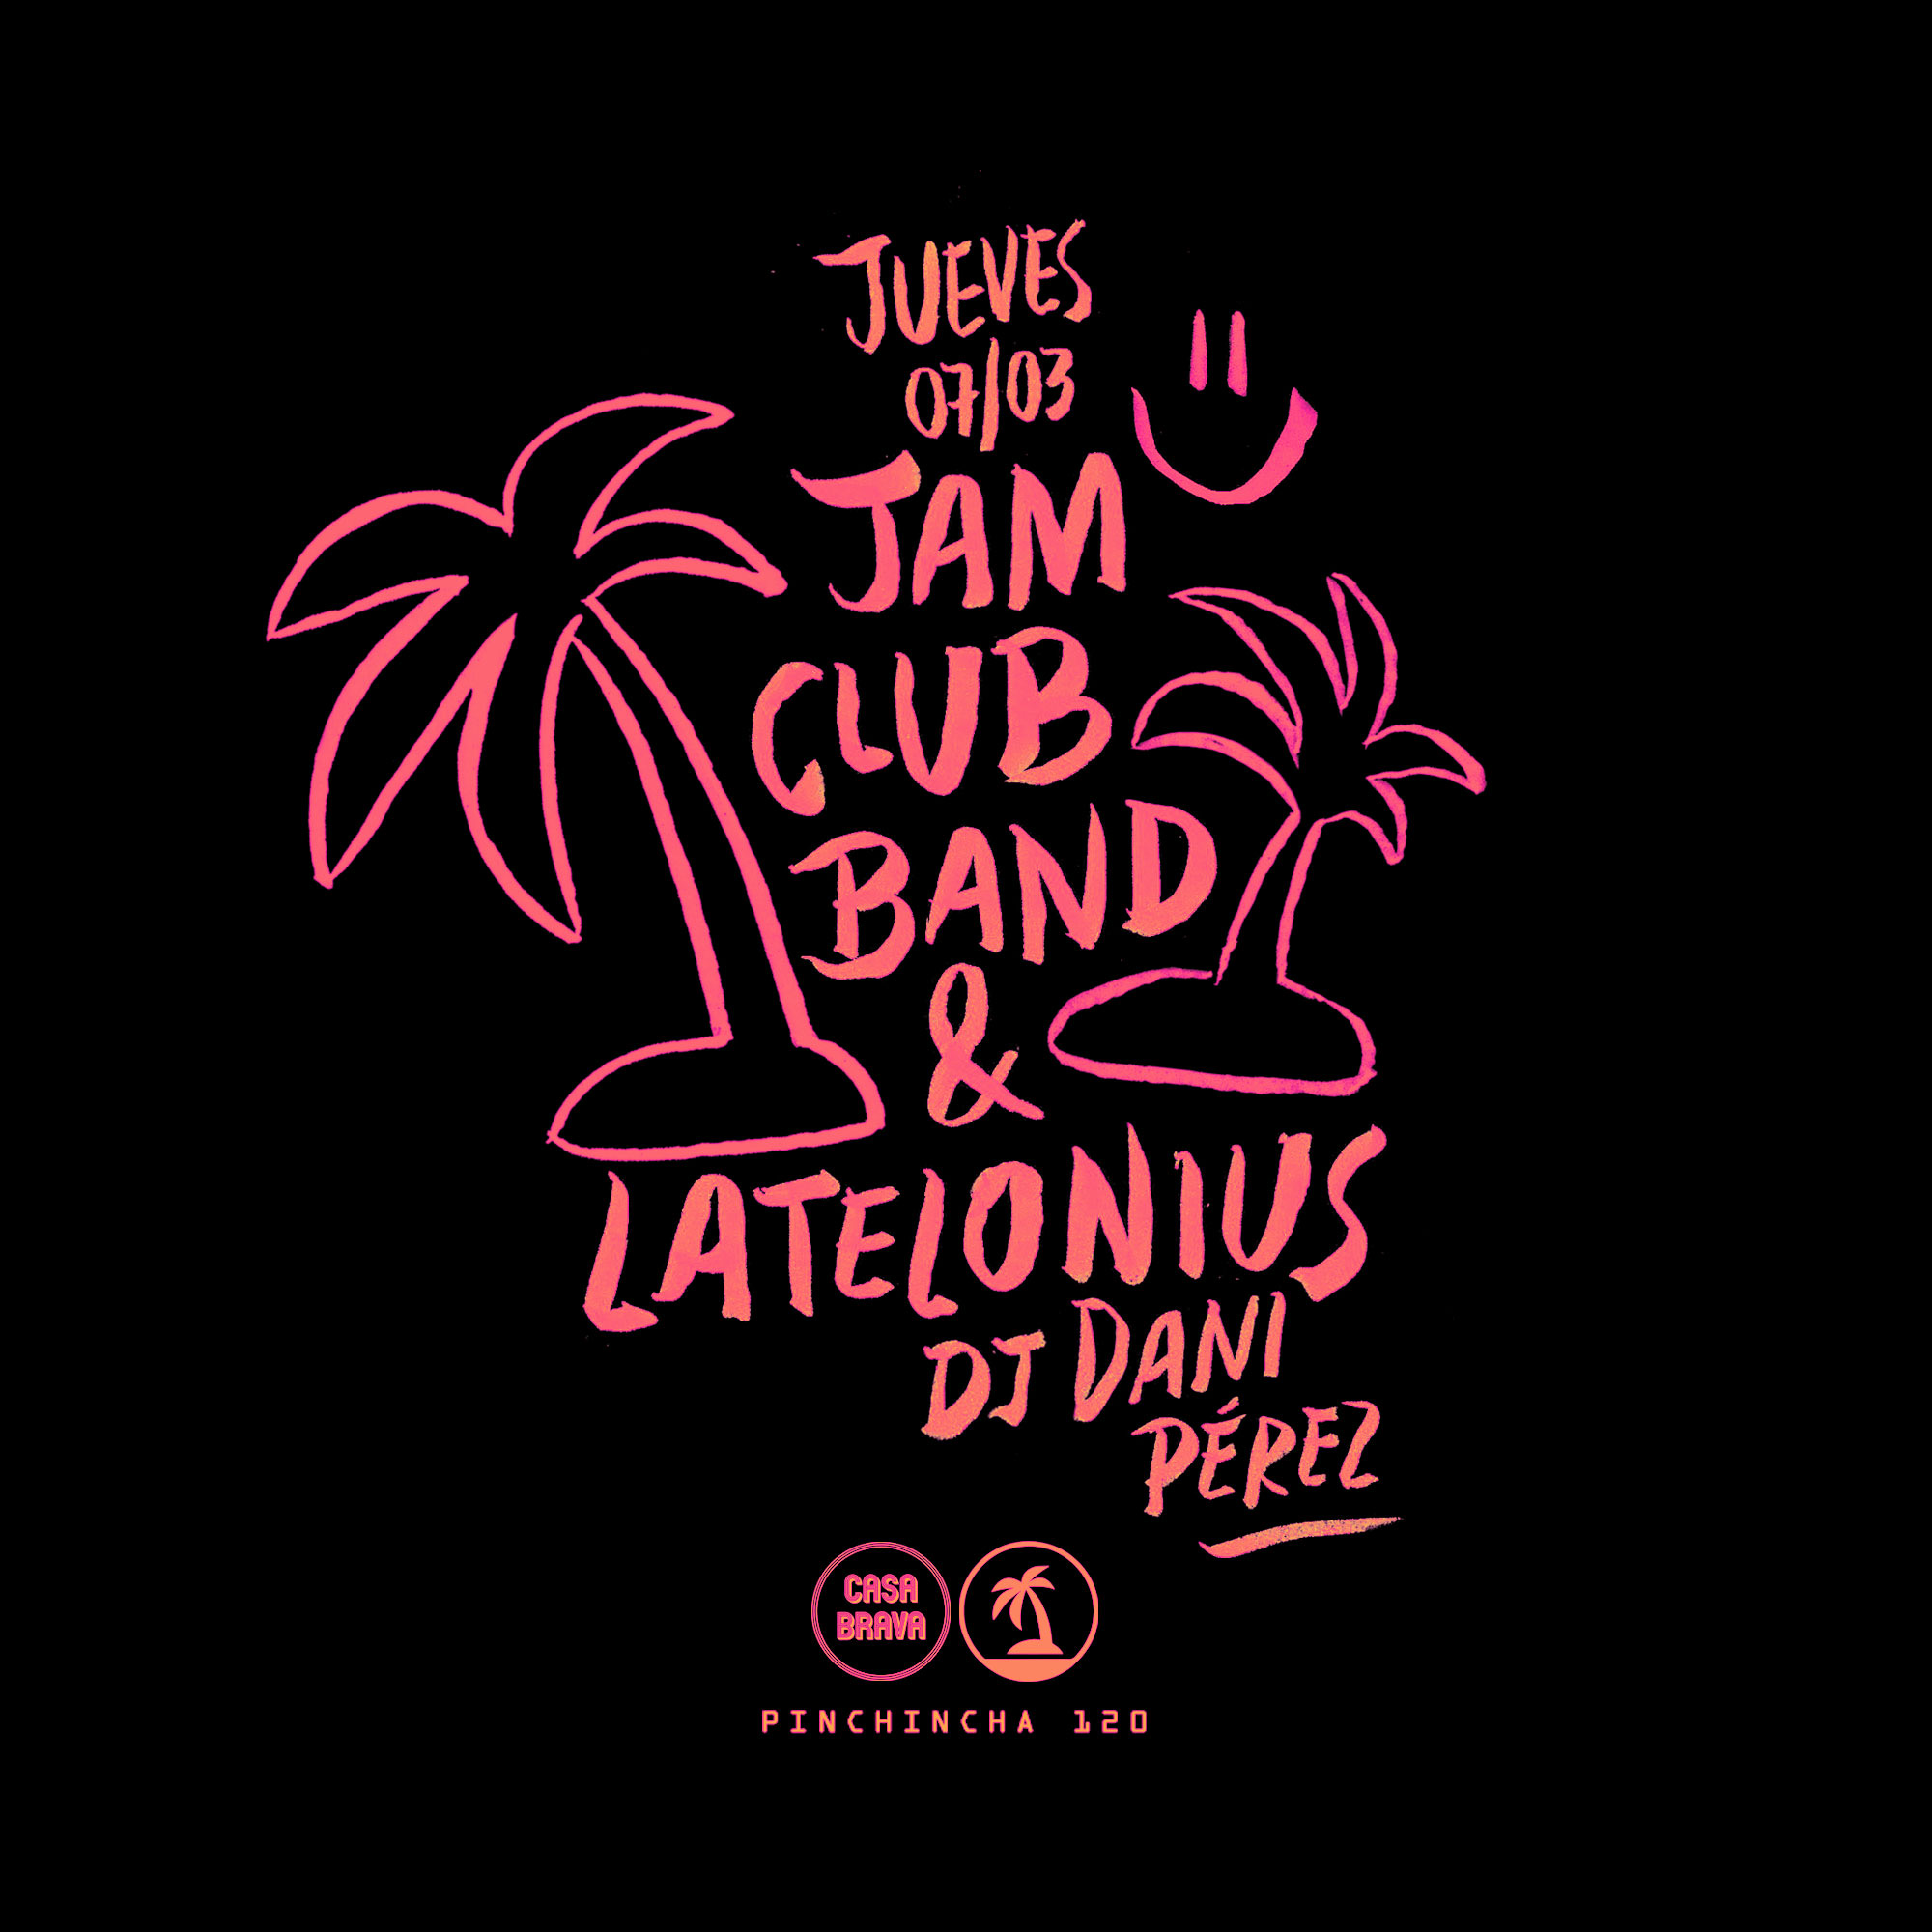 Jam Club Band & Latelonius